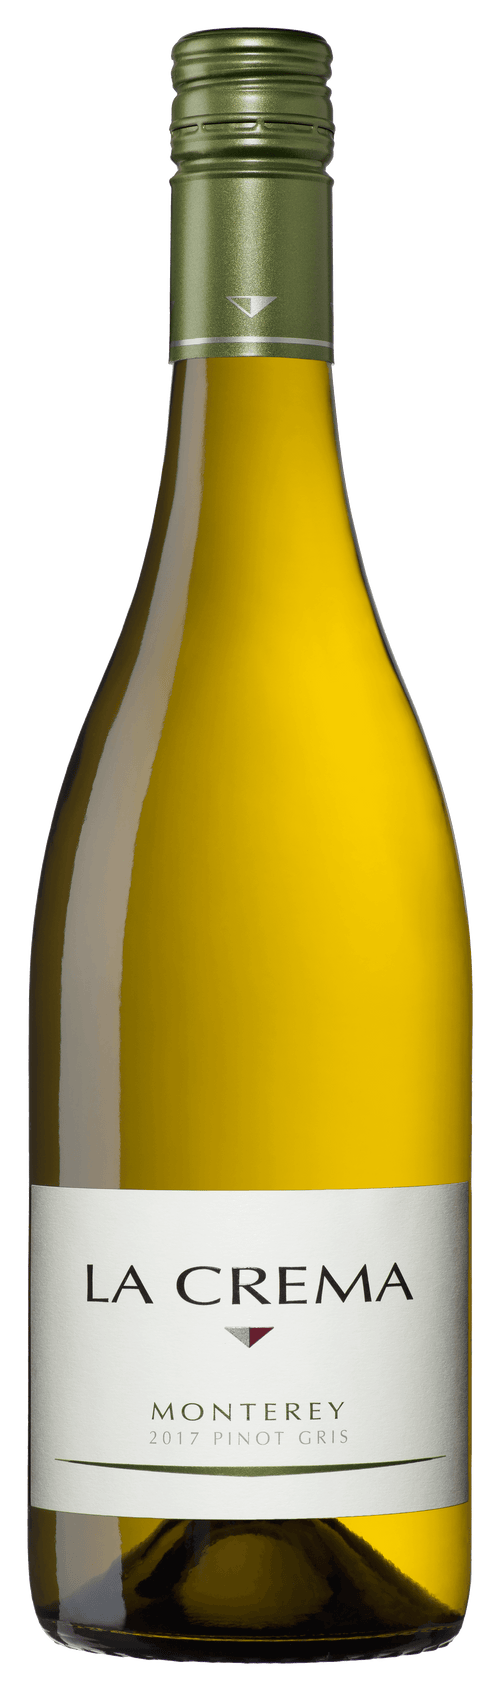 La Crema Monterey Pinot Gris 2018